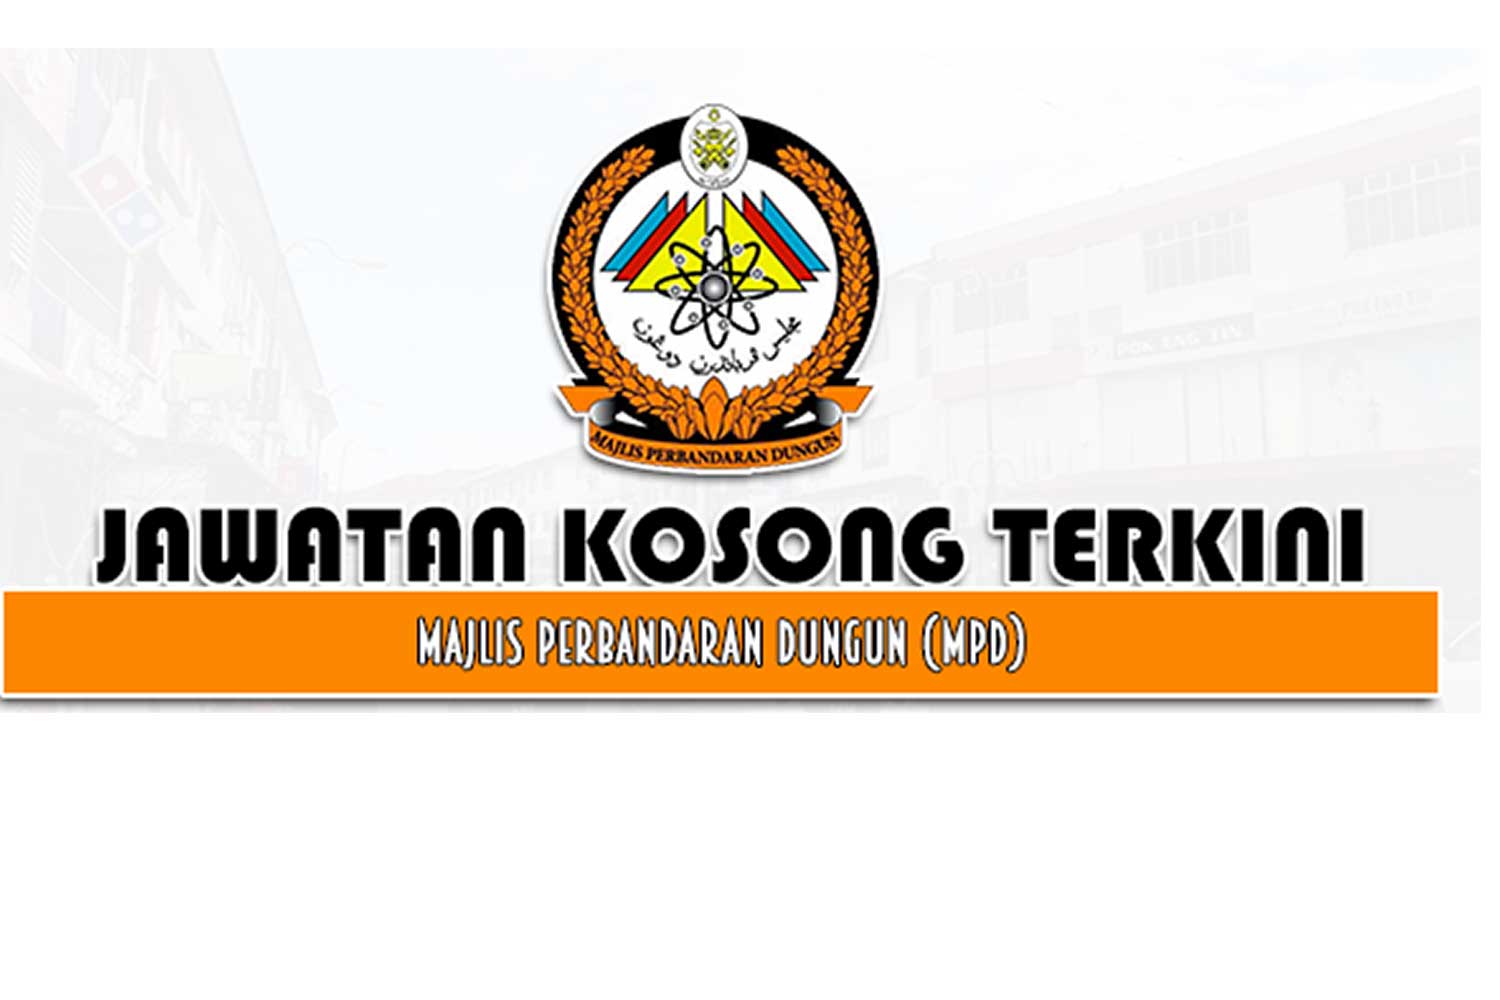 Jawatan kosong di Majlis Perbandaran Dungun, gaji cecah RM9,643